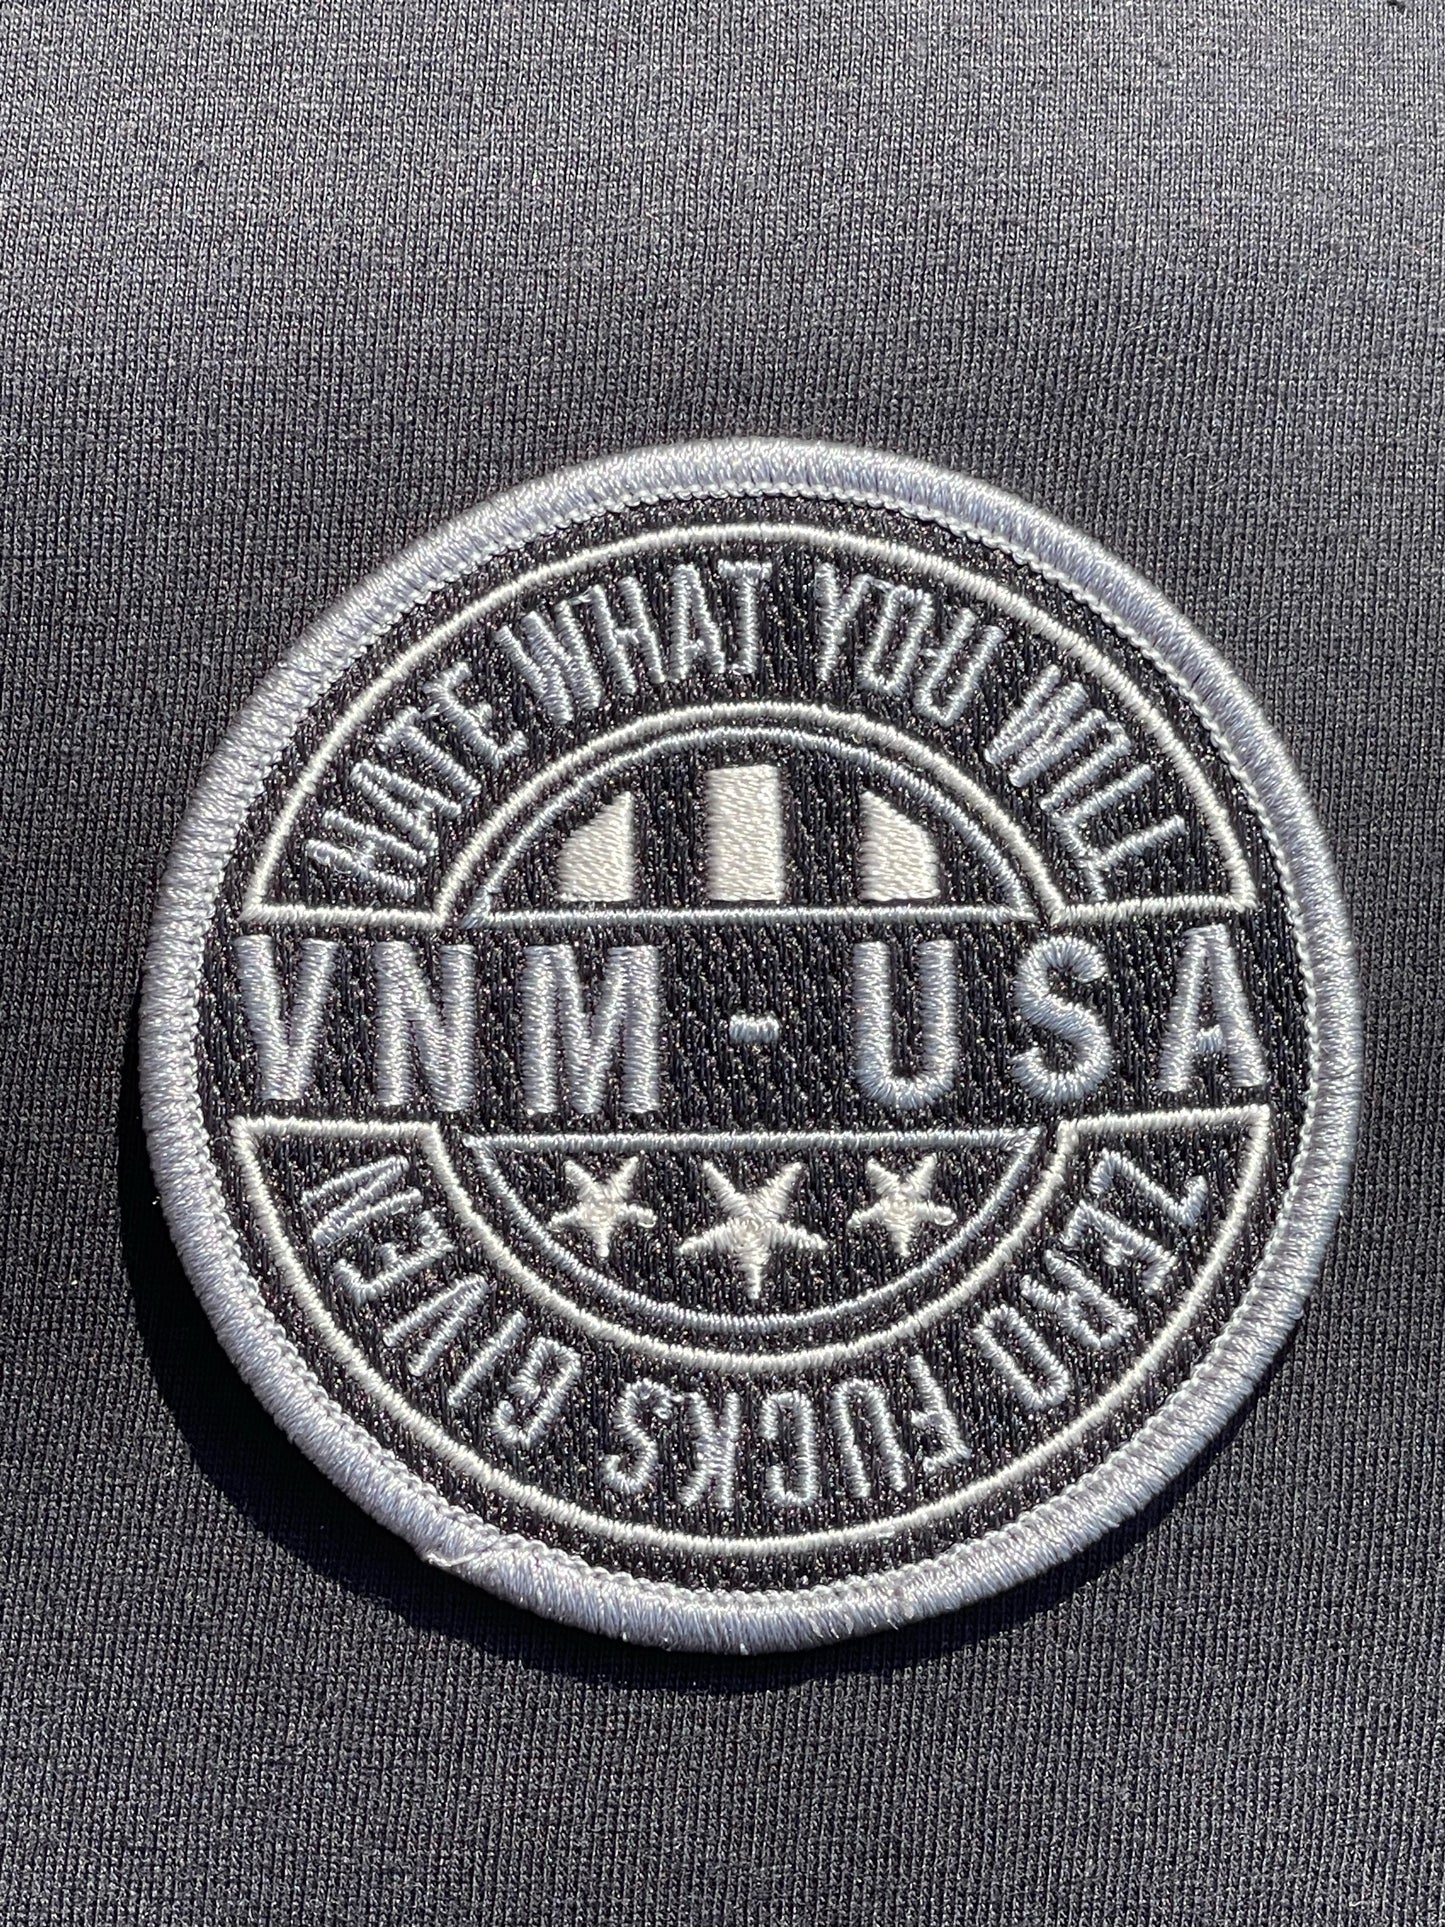 VNM-USA - Patch